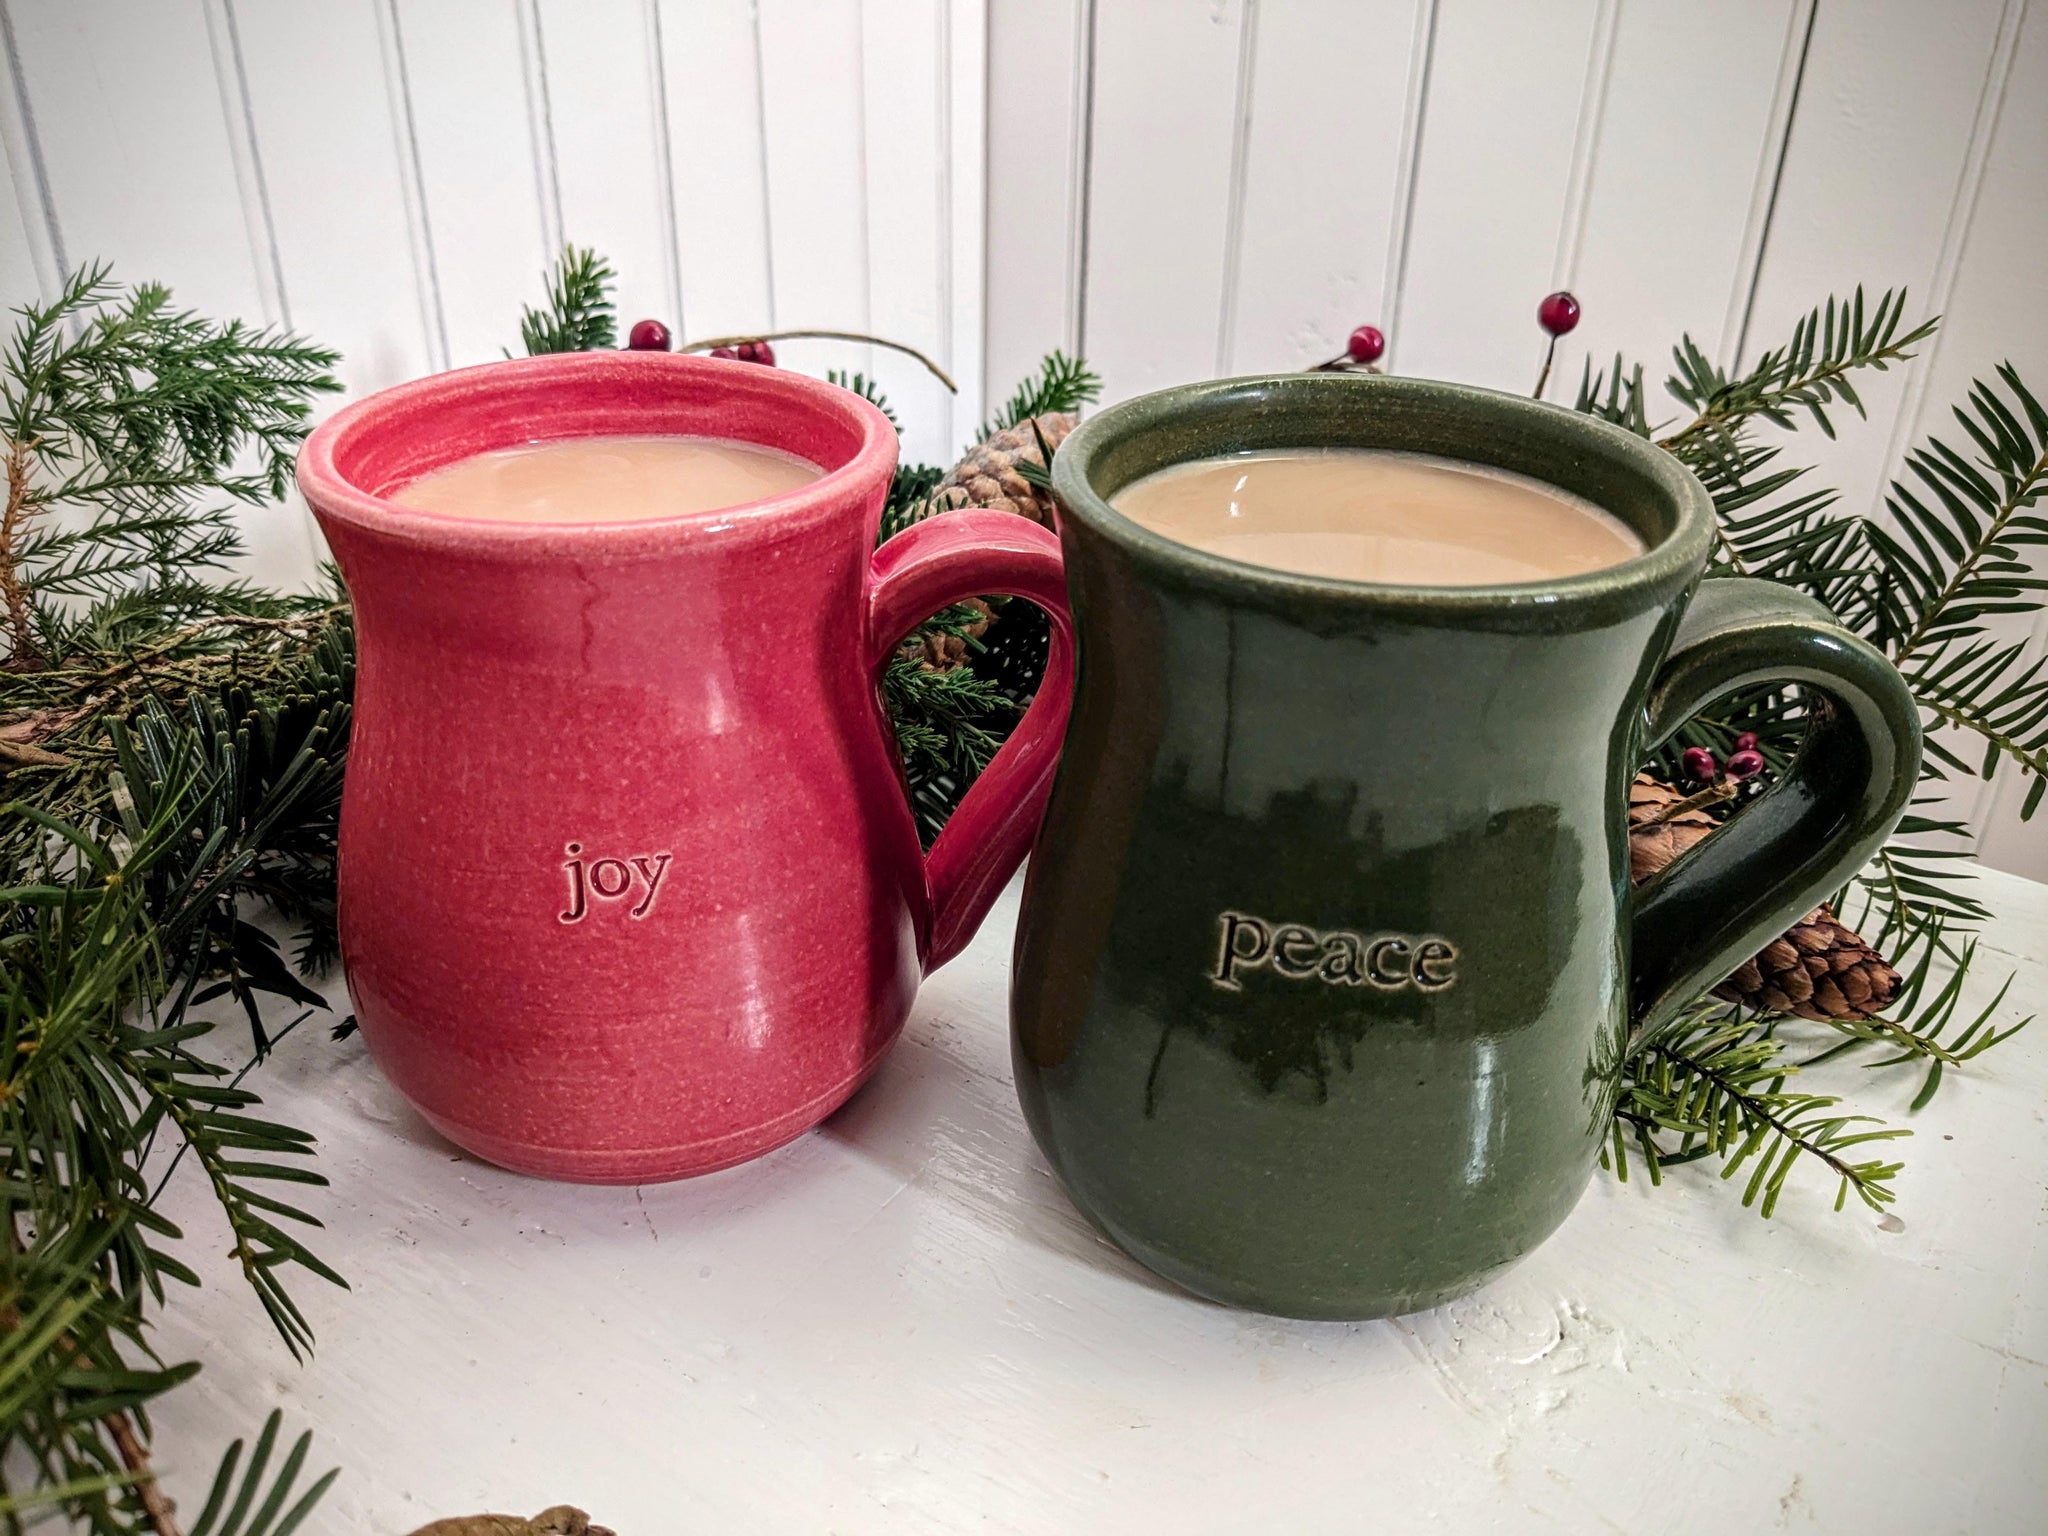 I Smell Snow Christmas Mug | By Switzer Kreations